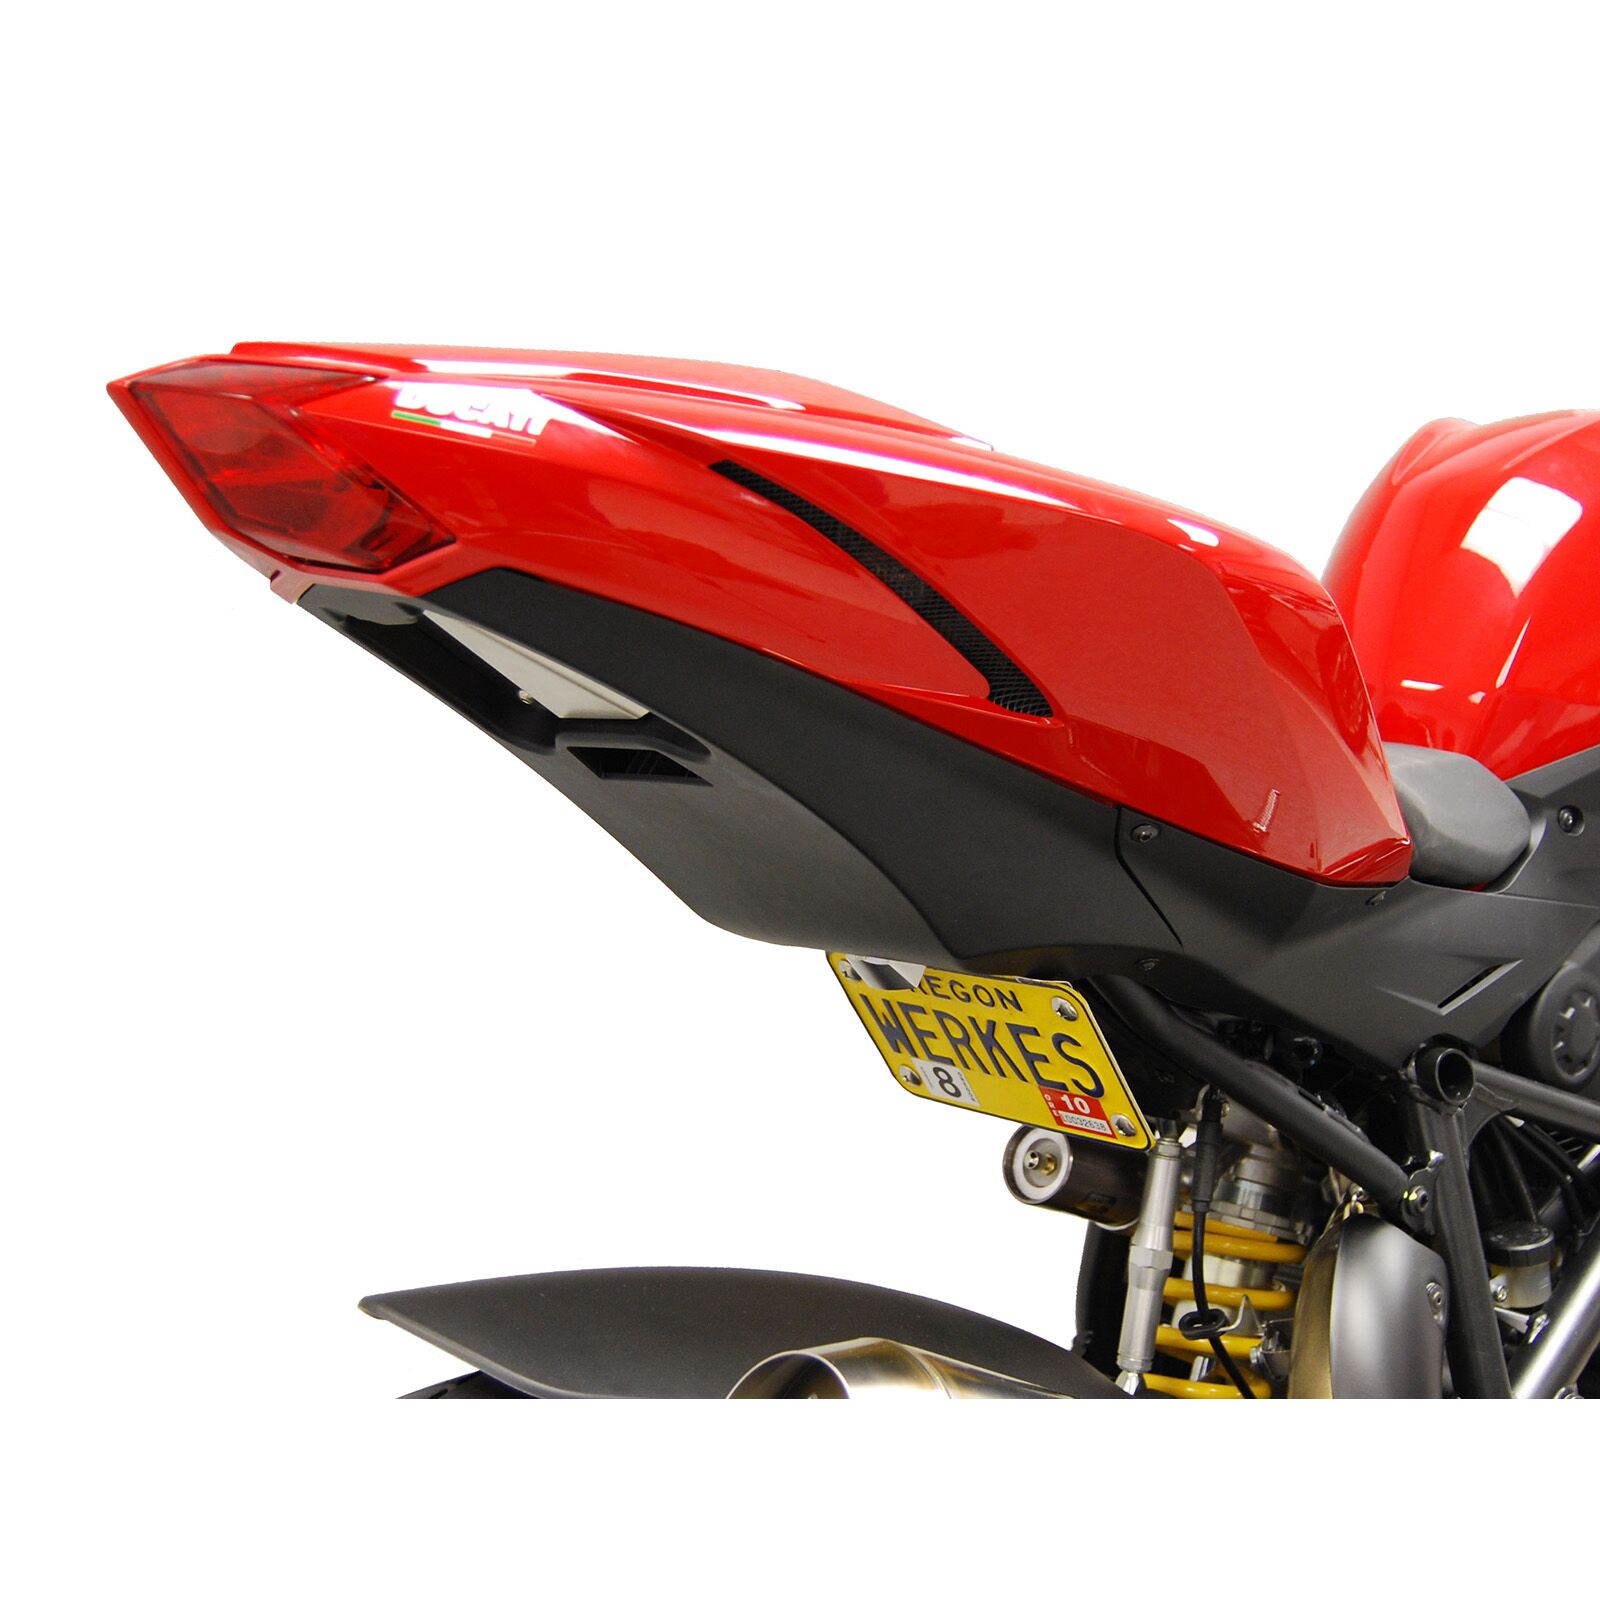 License Plate Holder Adjust Tail Light For Ducati Streetfighter 848 2011-2015